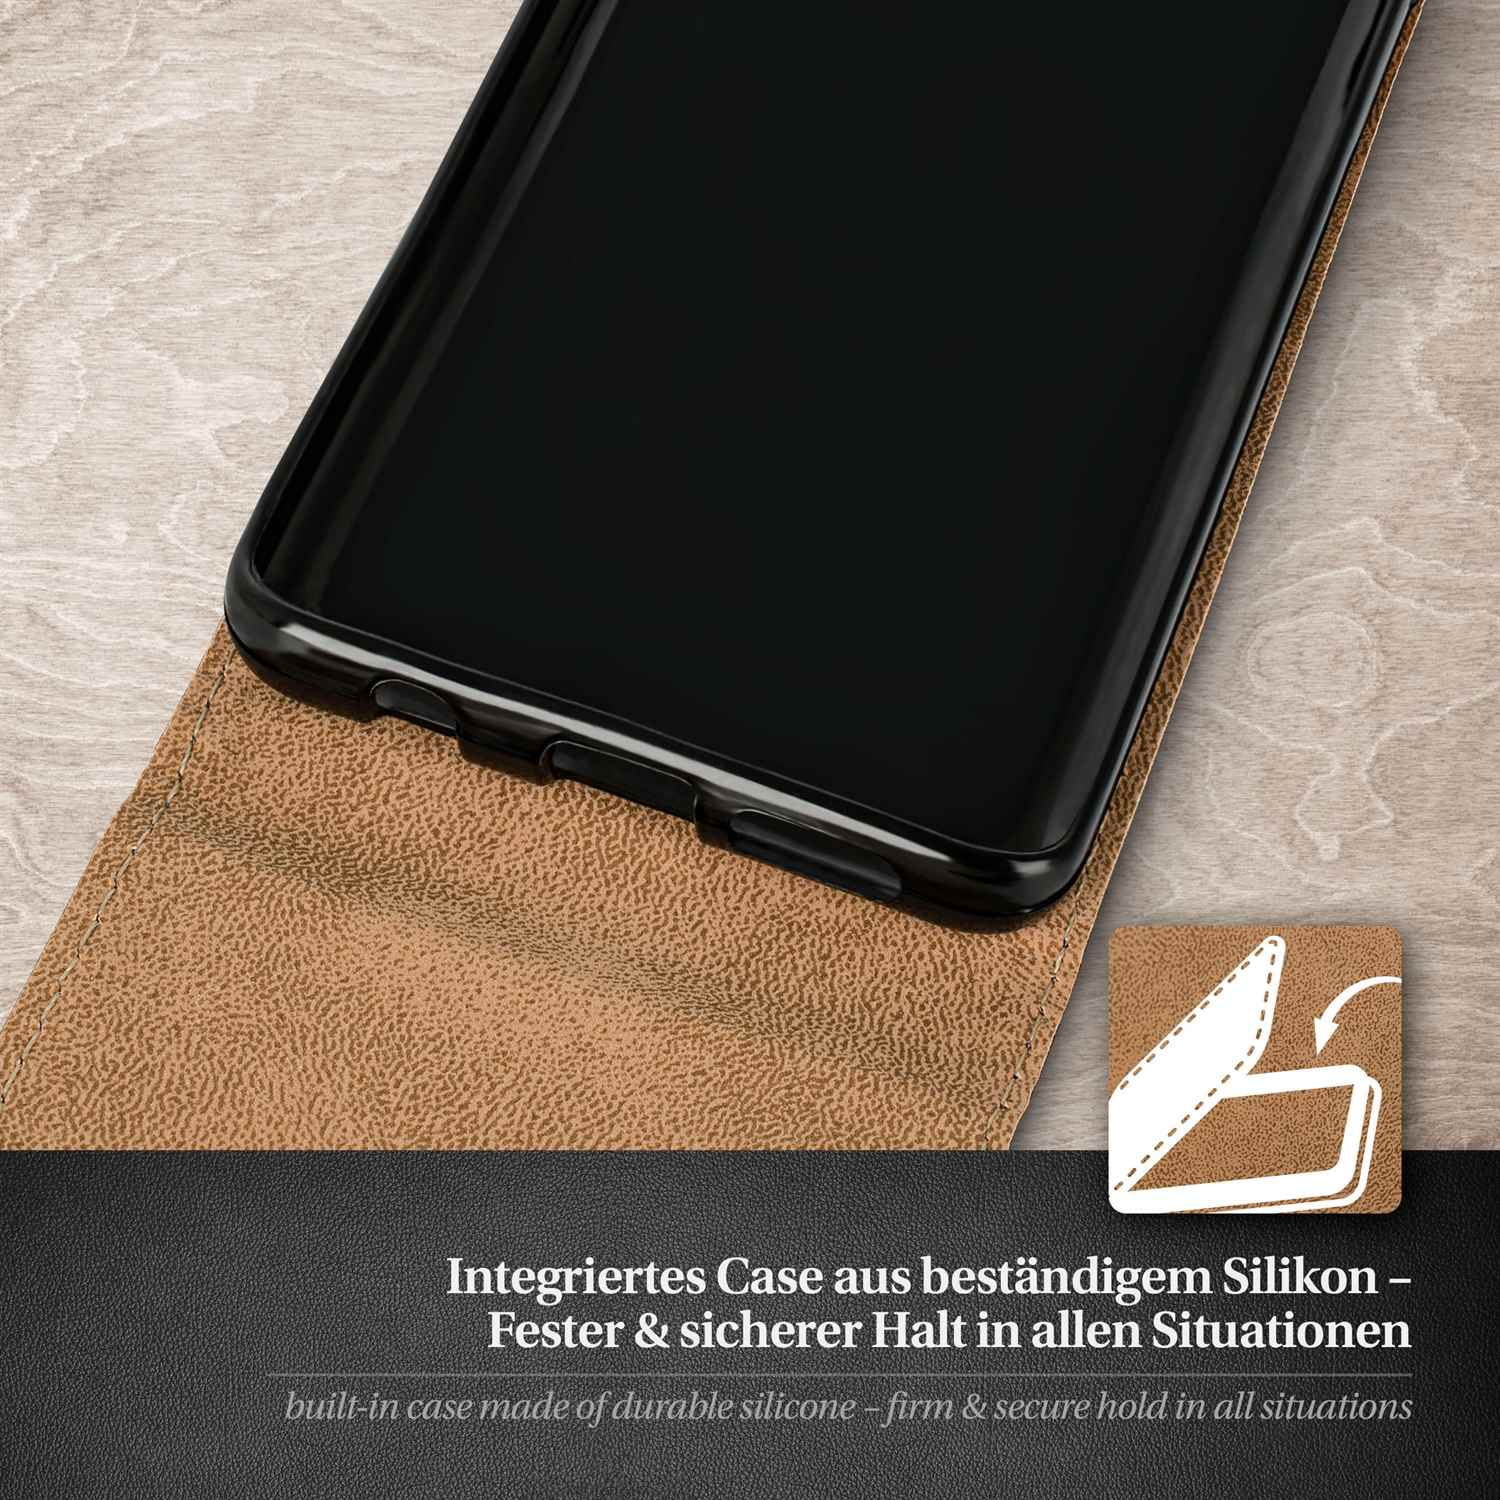 5G, Flip Flip Case, Galaxy Ultra MOEX Berry-Fuchsia Cover, S20 Samsung,